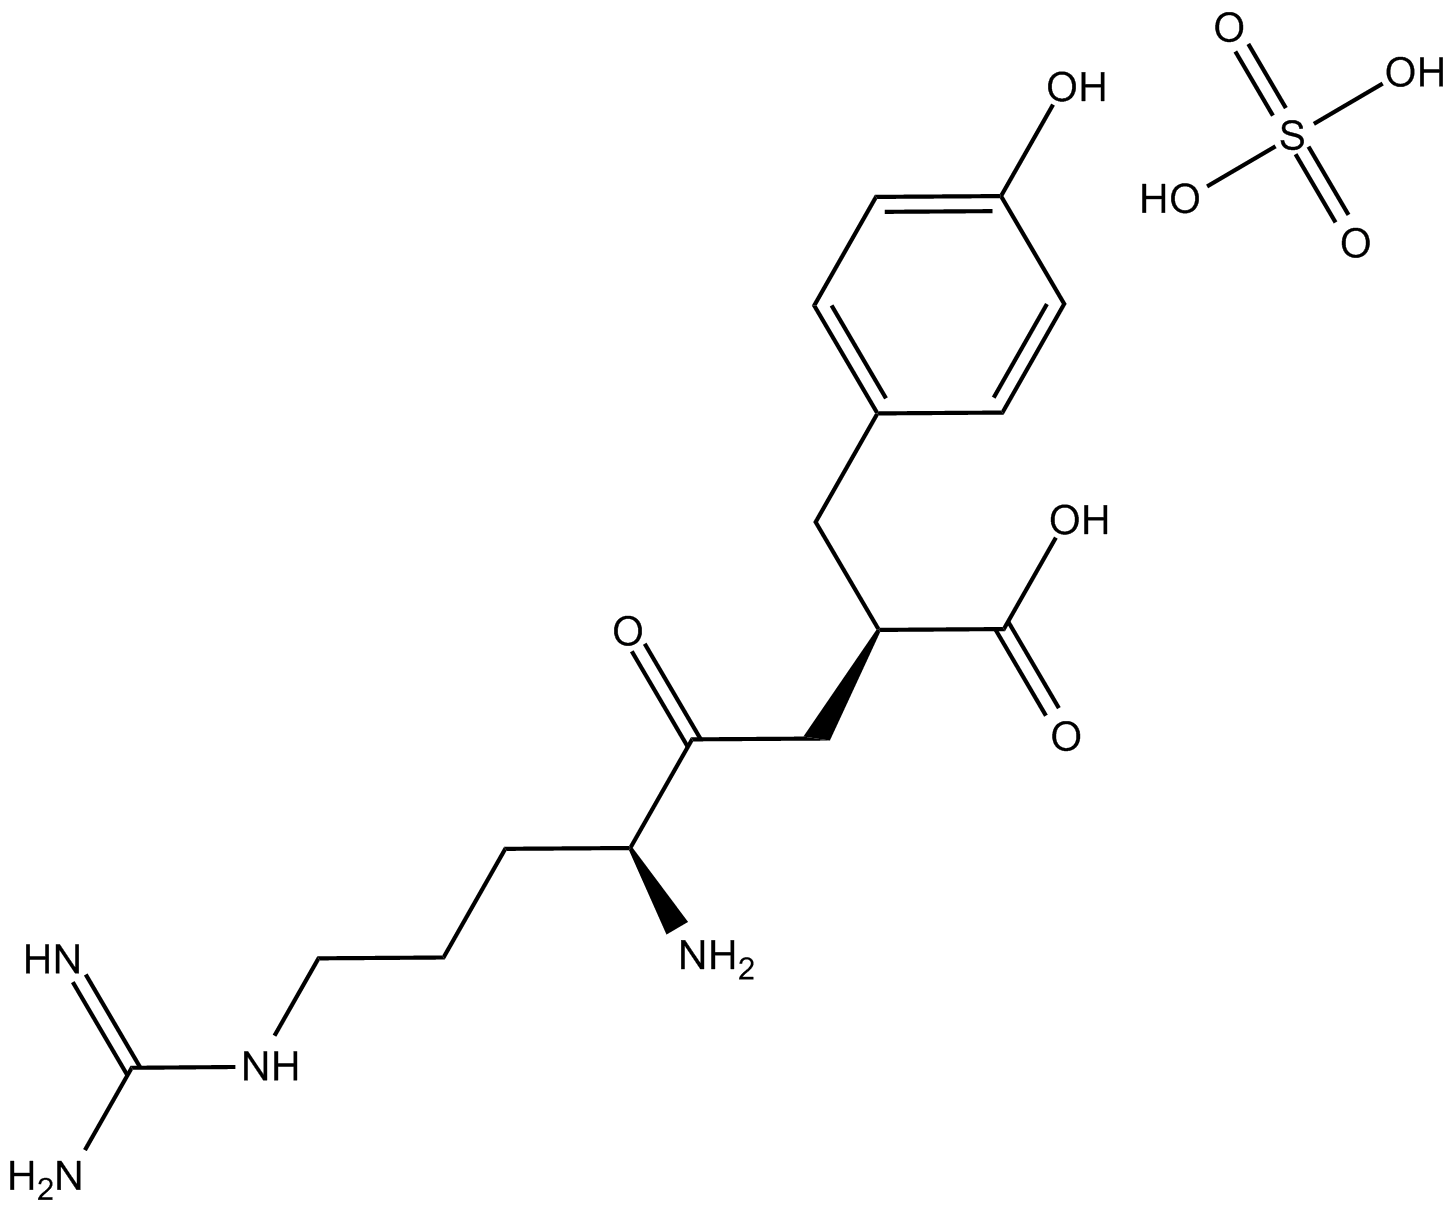 Arphamenine B (hemisulfate)